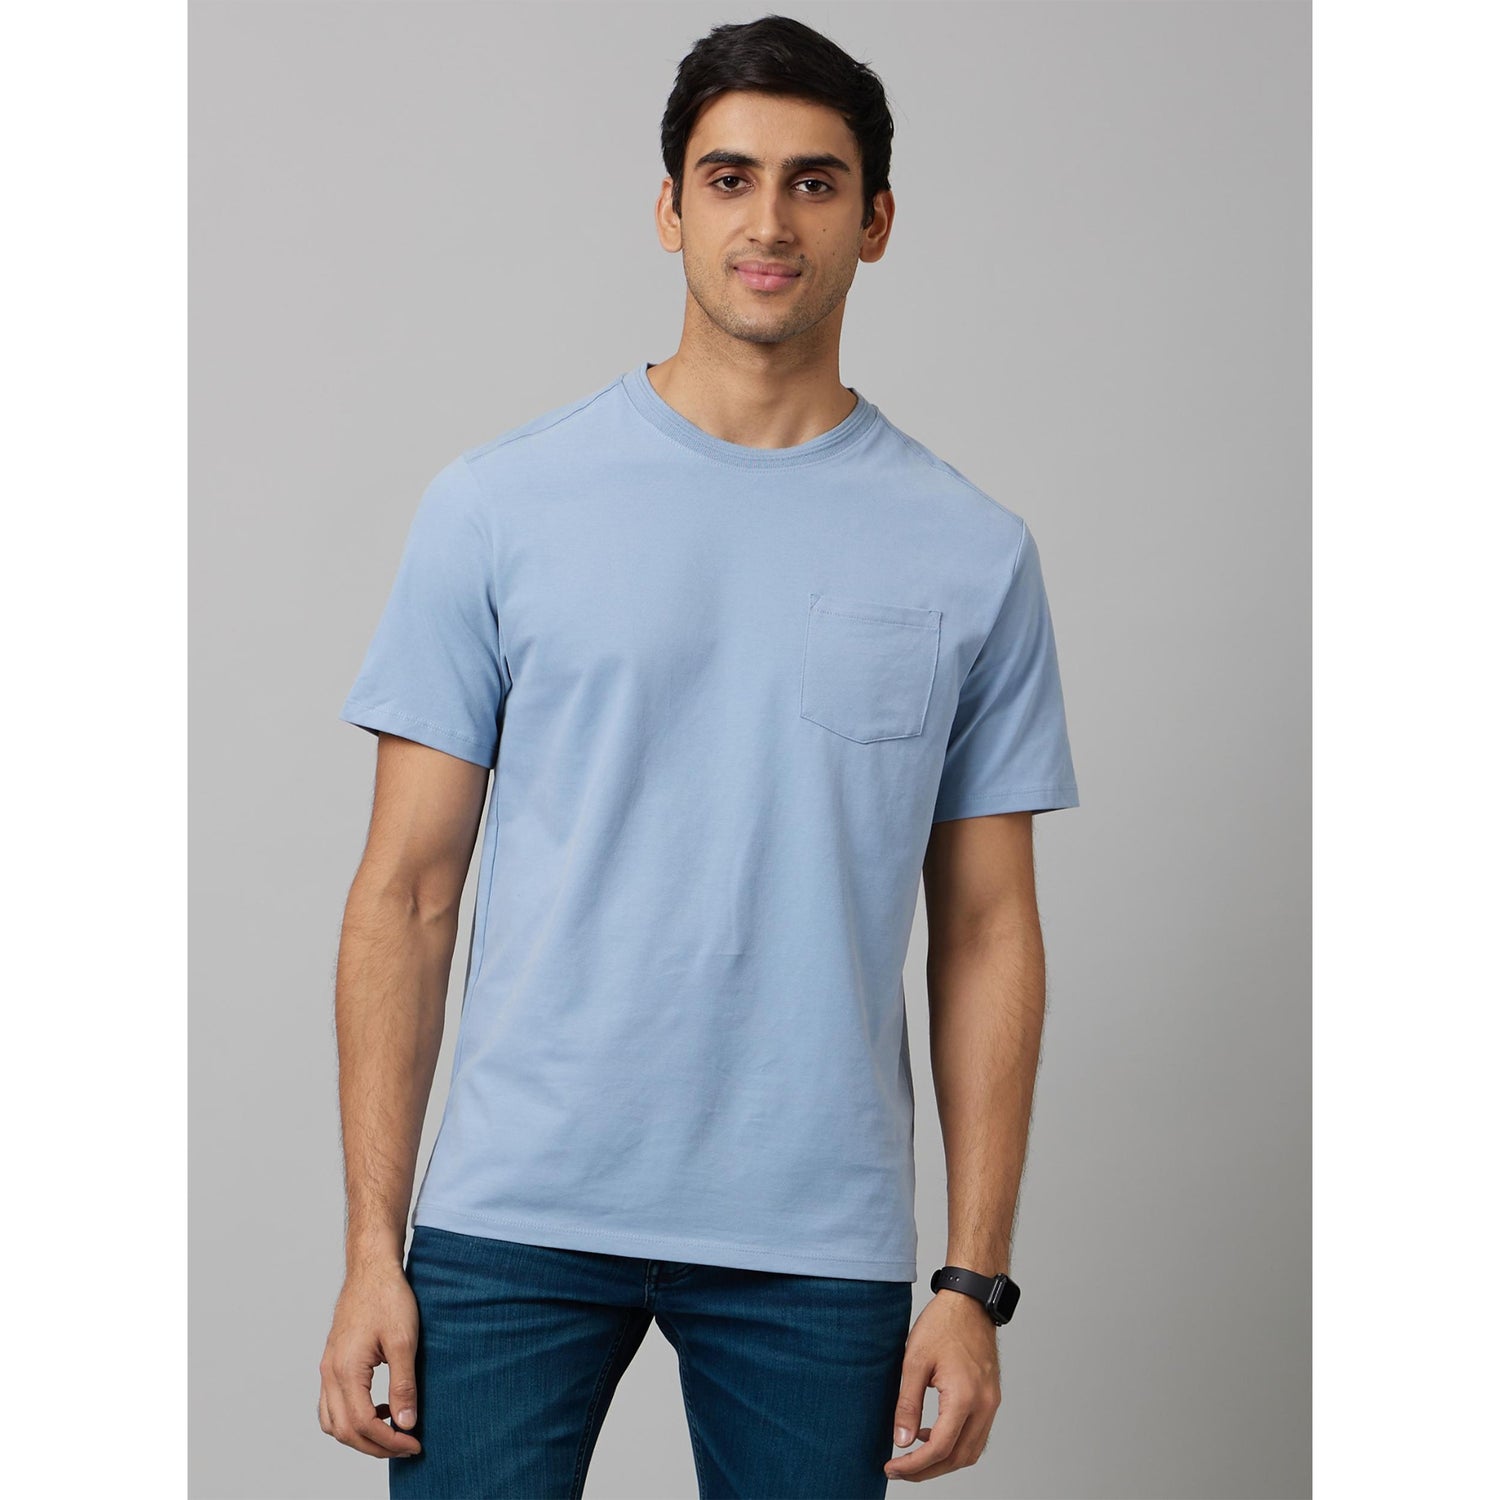 Blue Round Neck Pocket Breathable Cotton T-shirt (CESOLACEIN)